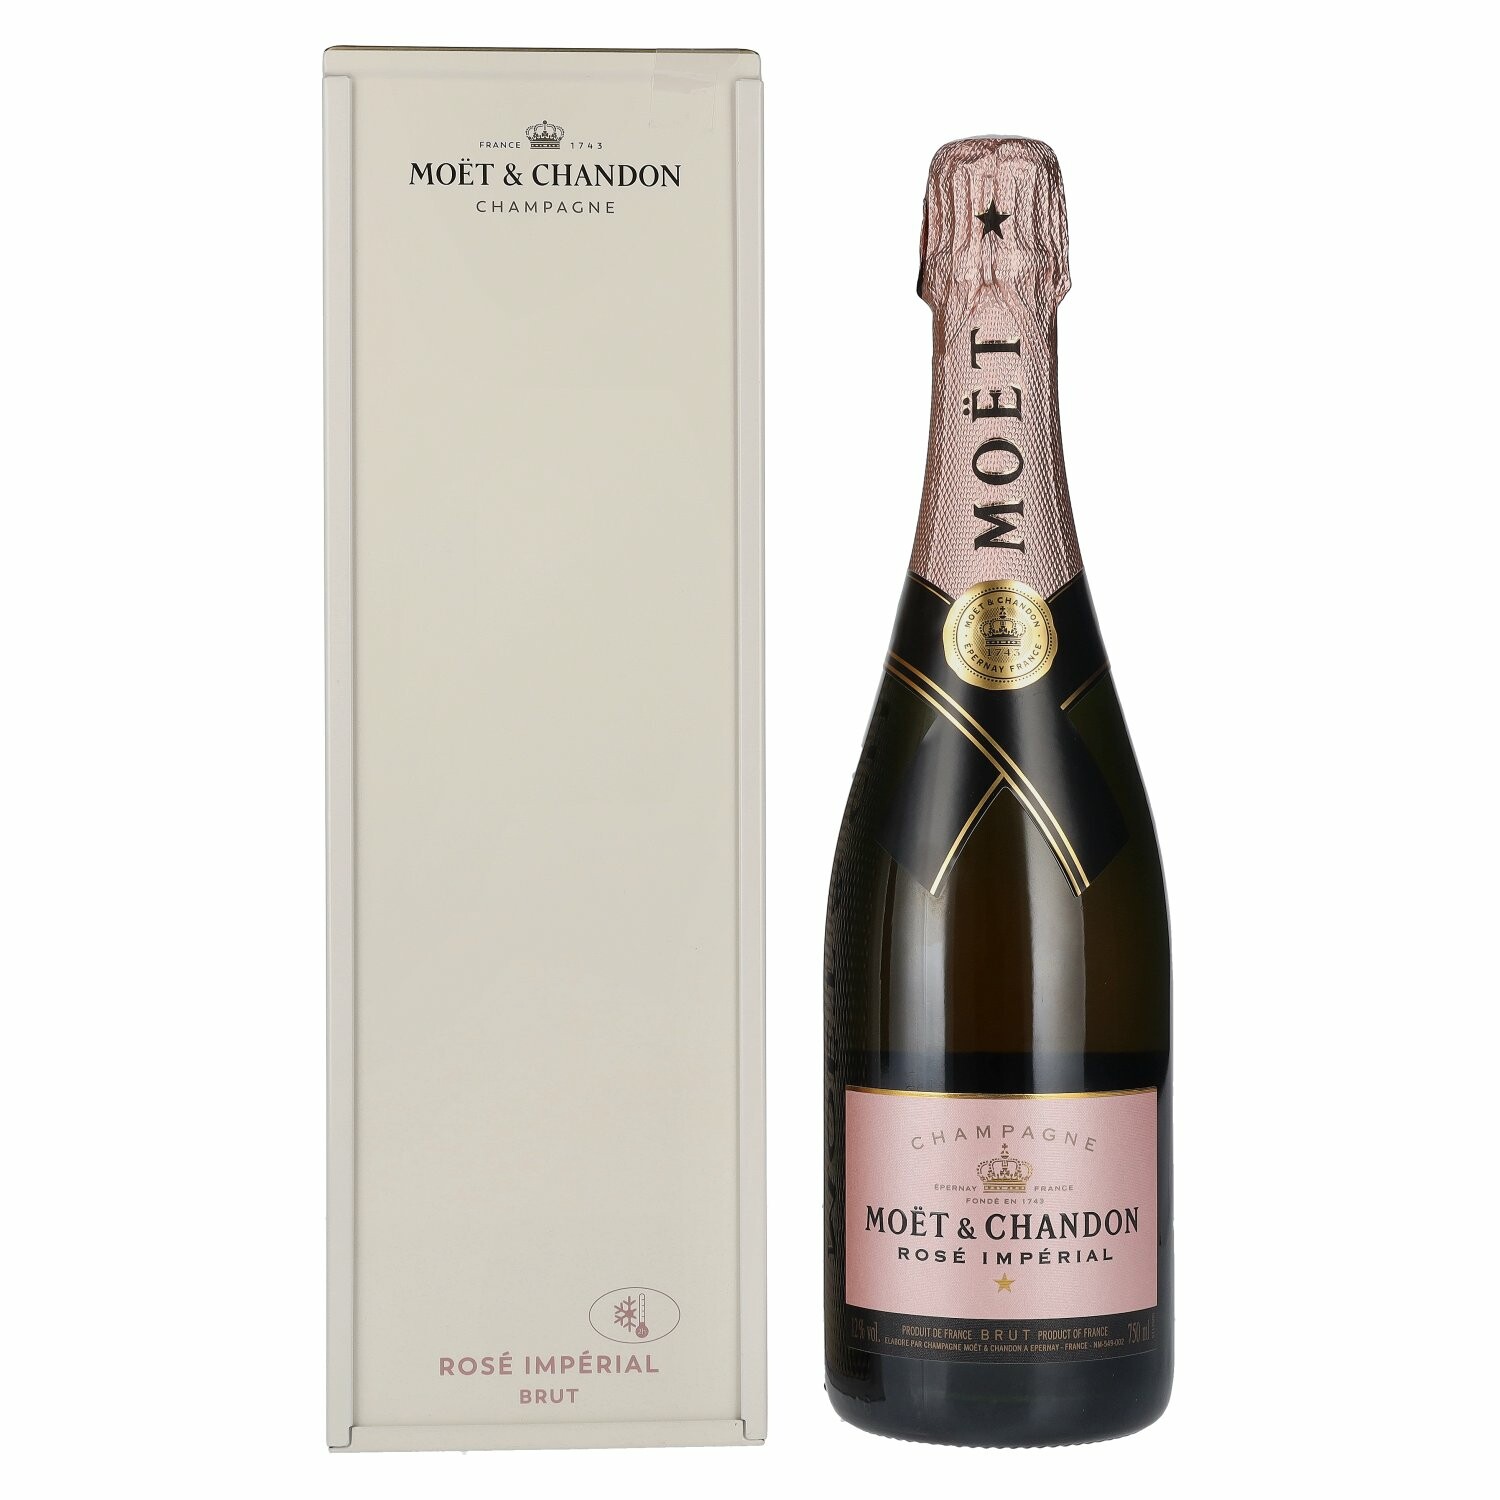 Moët & Chandon Champagne ROSÉ IMPÉRIAL Brut 12% Vol. 0,75l in Tinbox